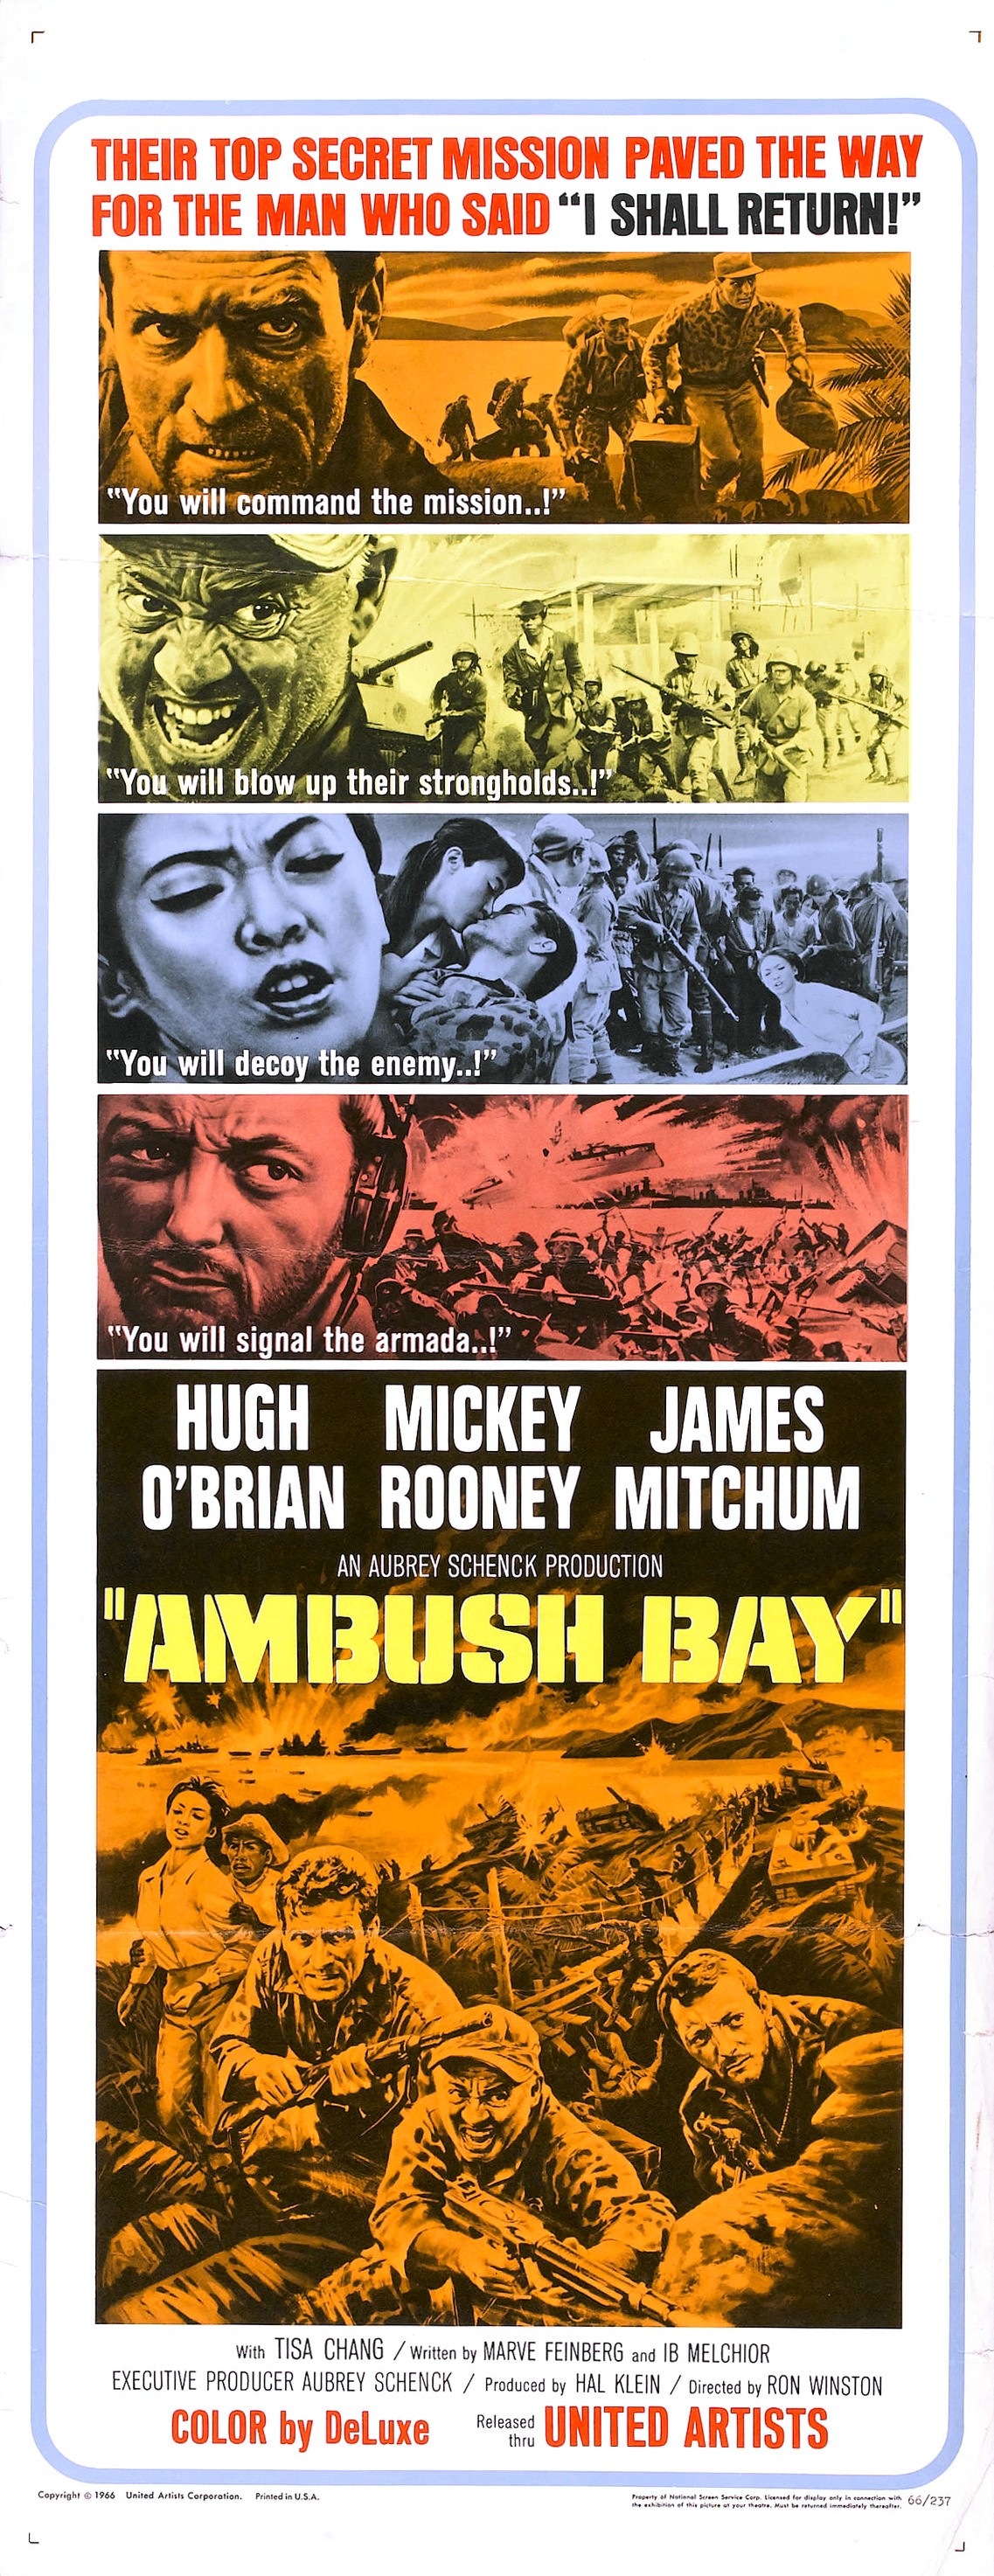 Mega Sized Movie Poster Image for Ambush Bay (#1 of 3)